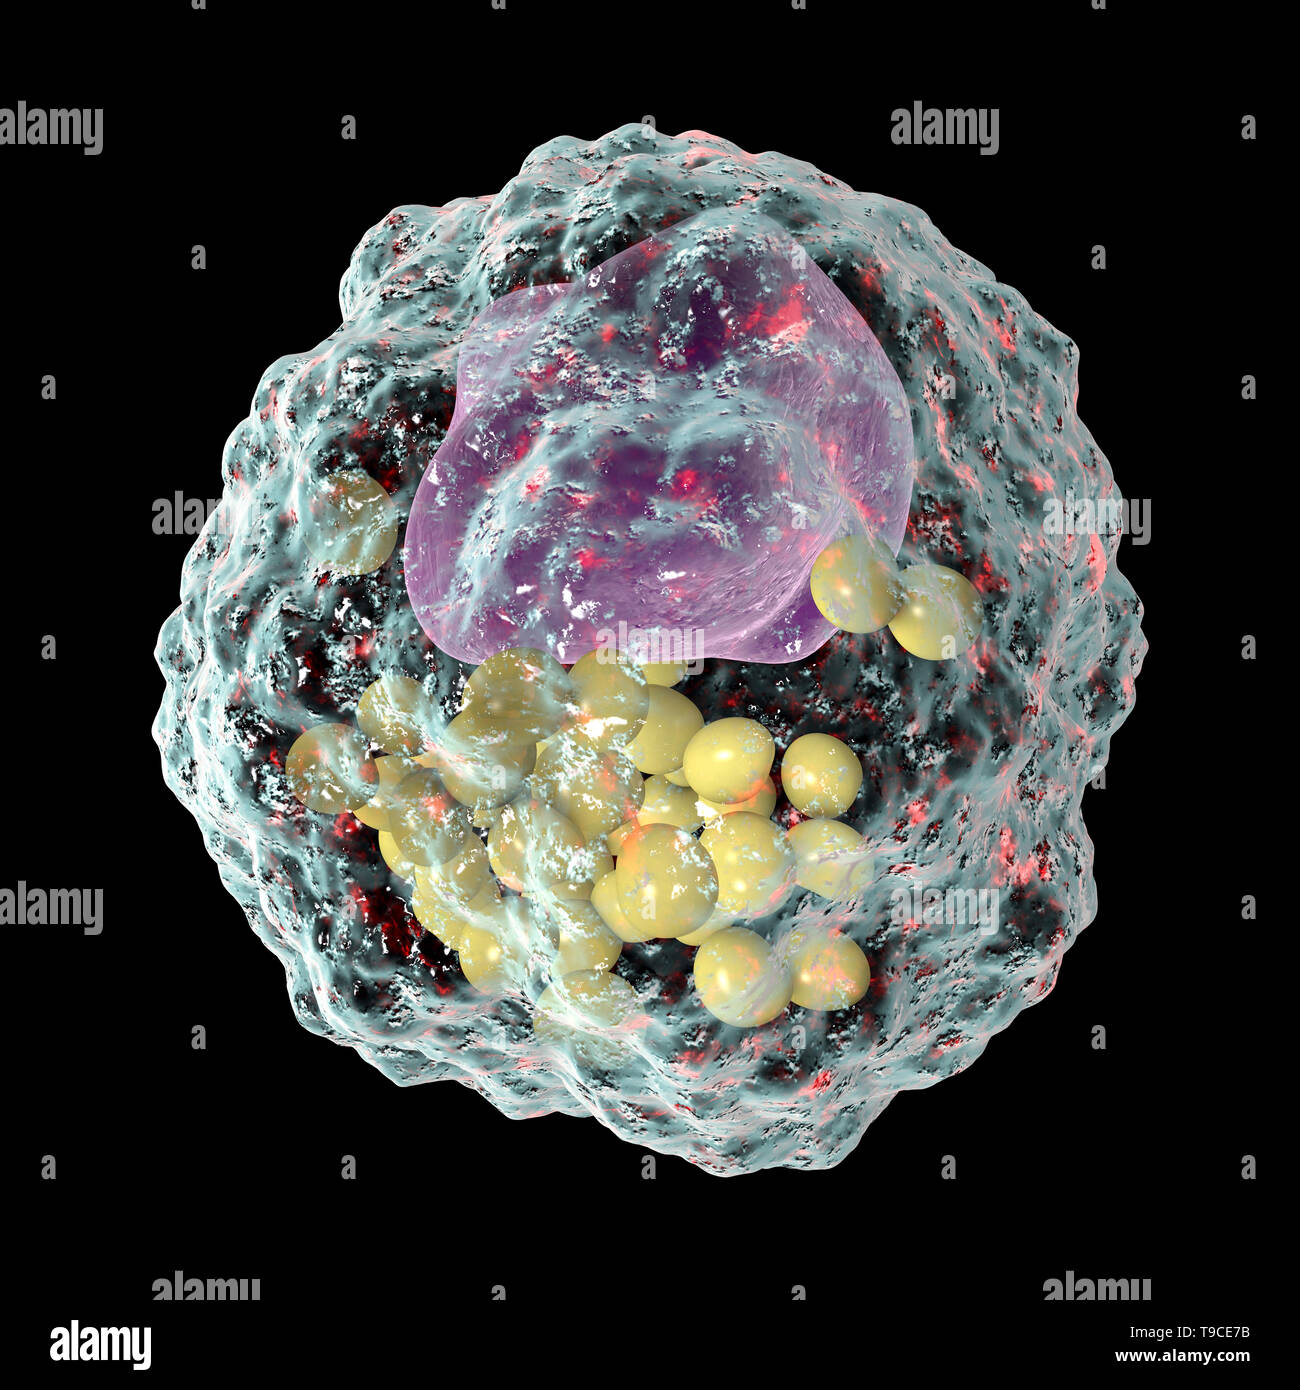 Macrophage foam cell, illustration Stock Photo